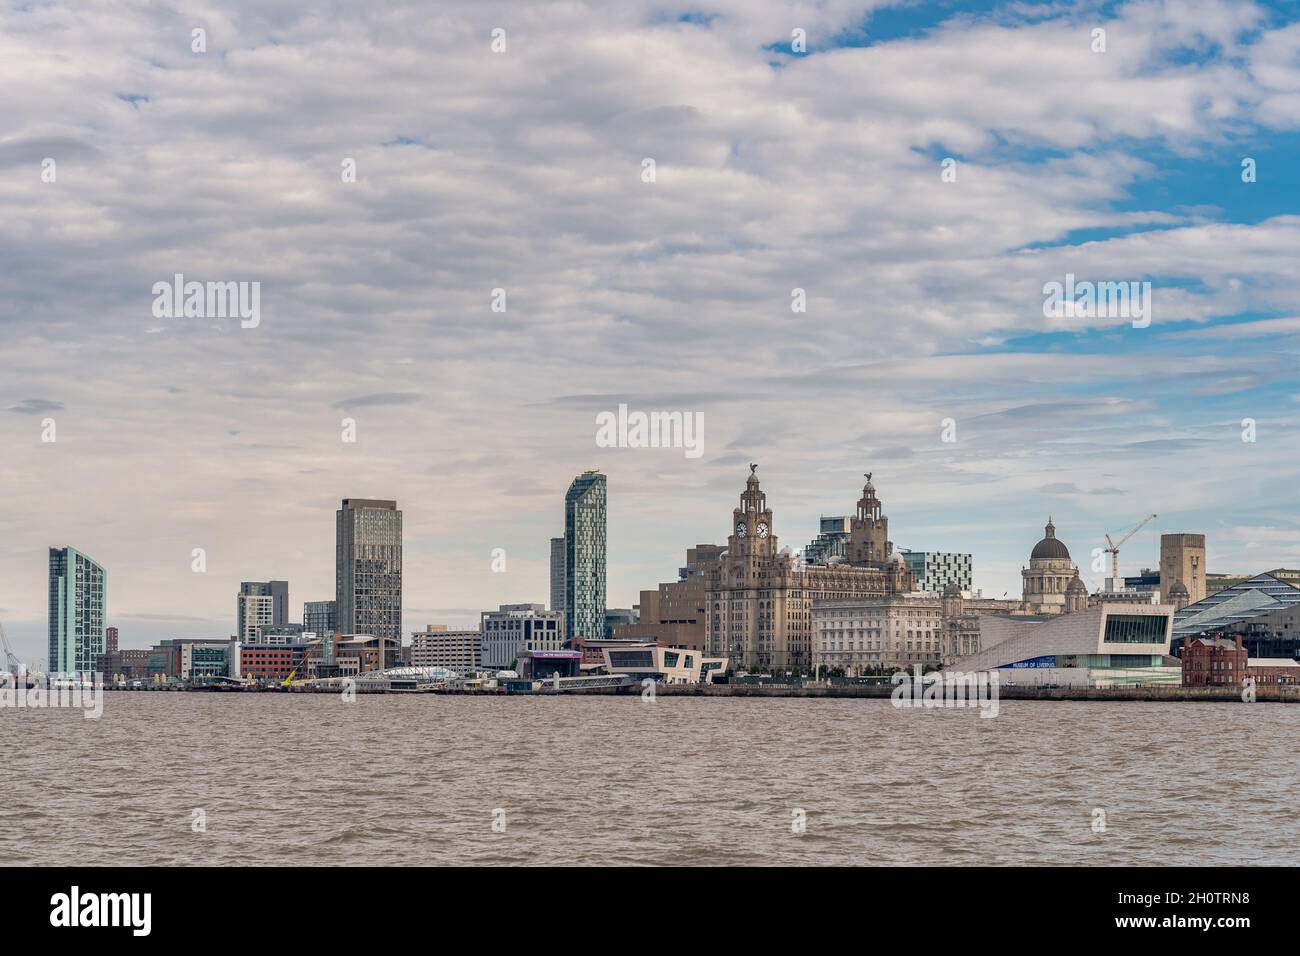 Front de mer de Liverpool depuis le ferry Mersey, Liverpool, Merseyside, Royaume-Uni. Banque D'Images